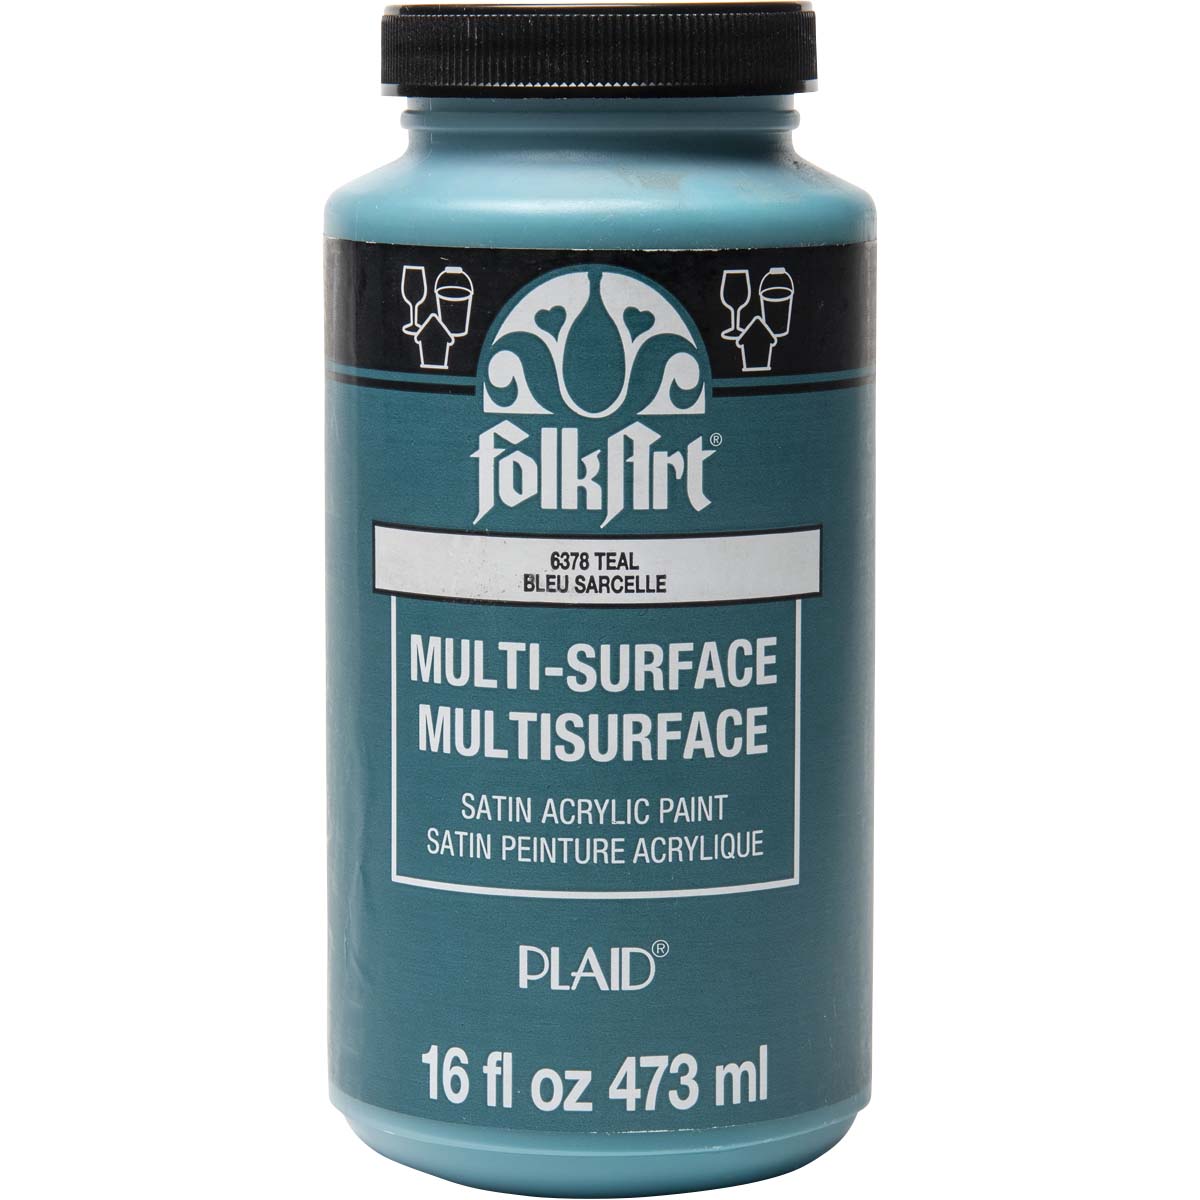 FolkArt ® Multi-Surface Satin Acrylic Paints - Teal, 16 oz. - 6378